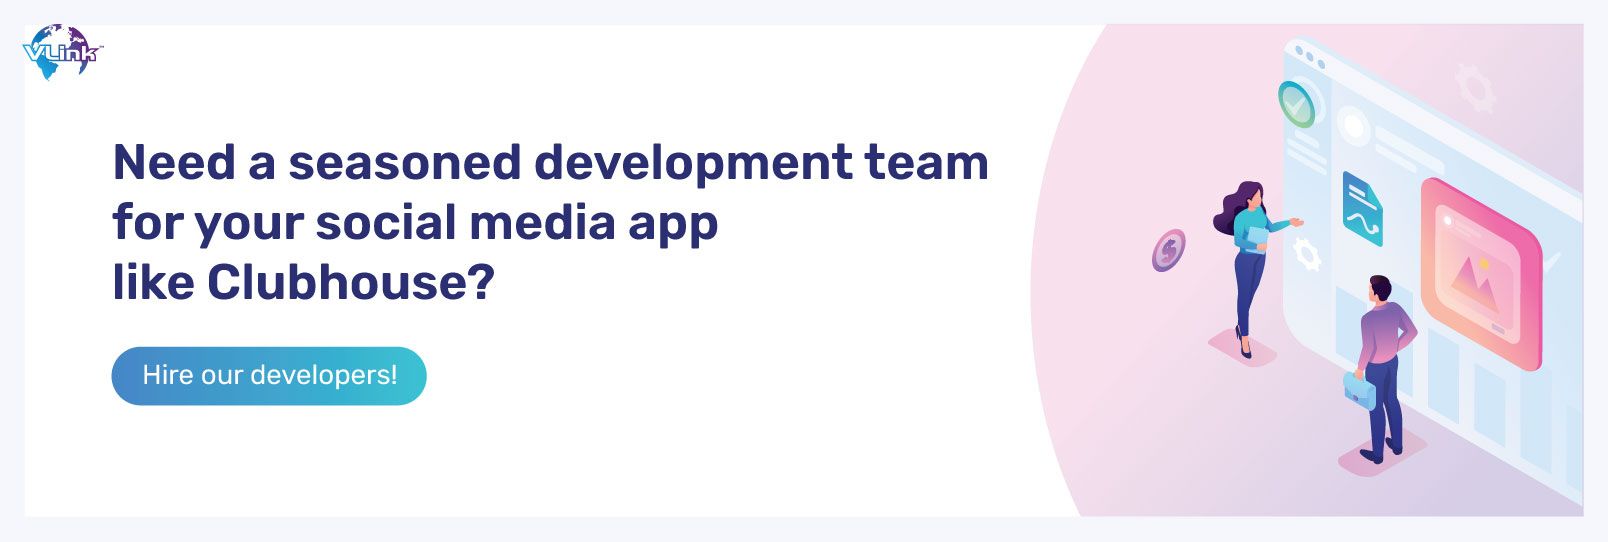 Need a seasoned development team for your social media app